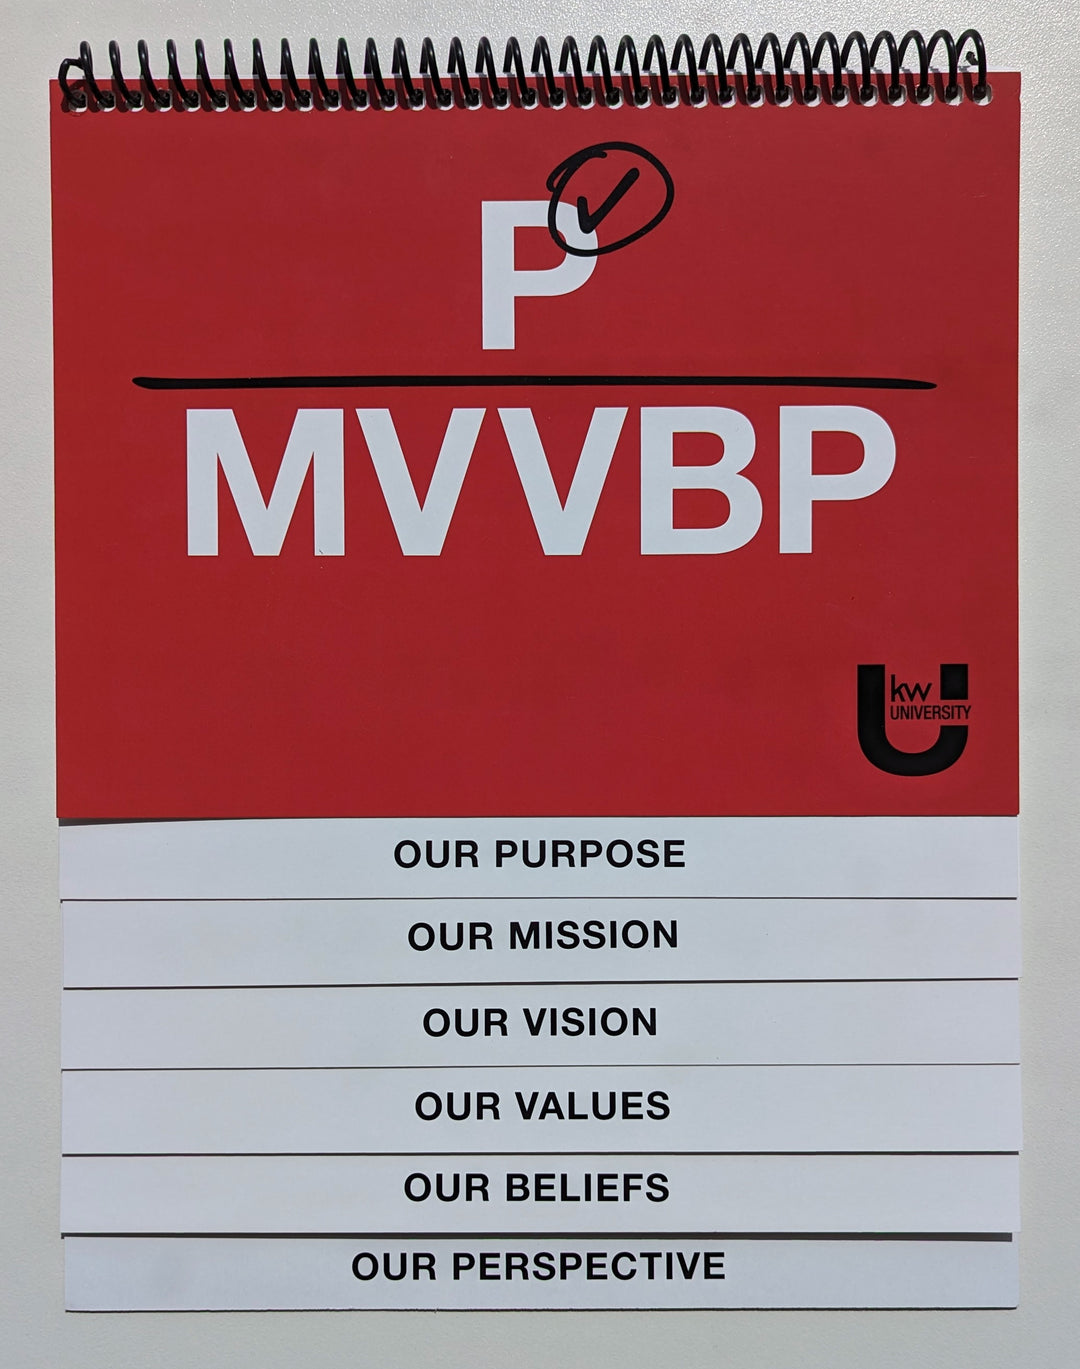 KWU Quick Flip Book - P | MVVBP